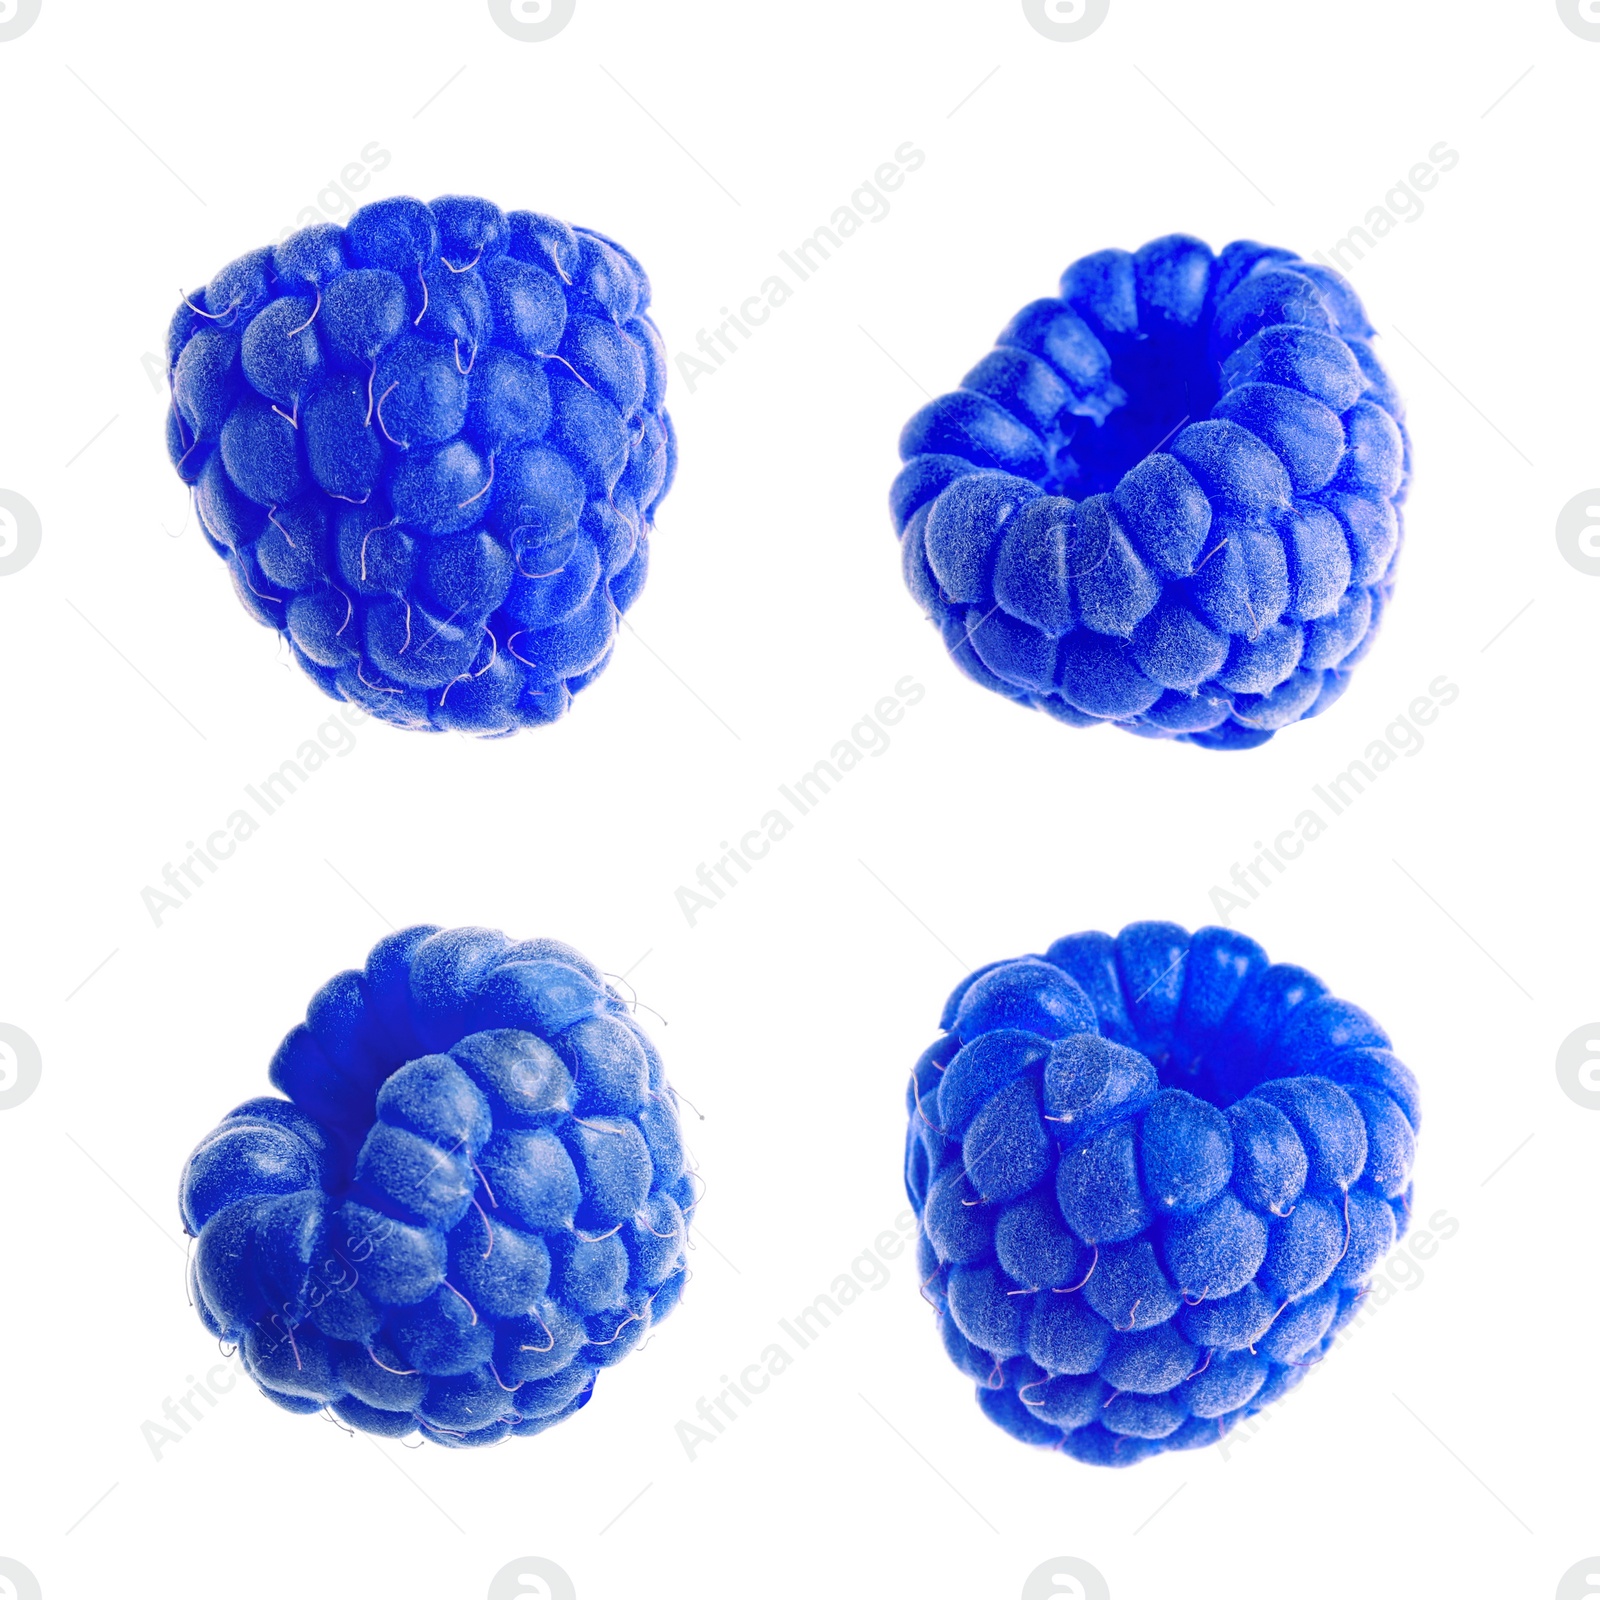 Image of Set with fresh tasty blue raspberries on white background